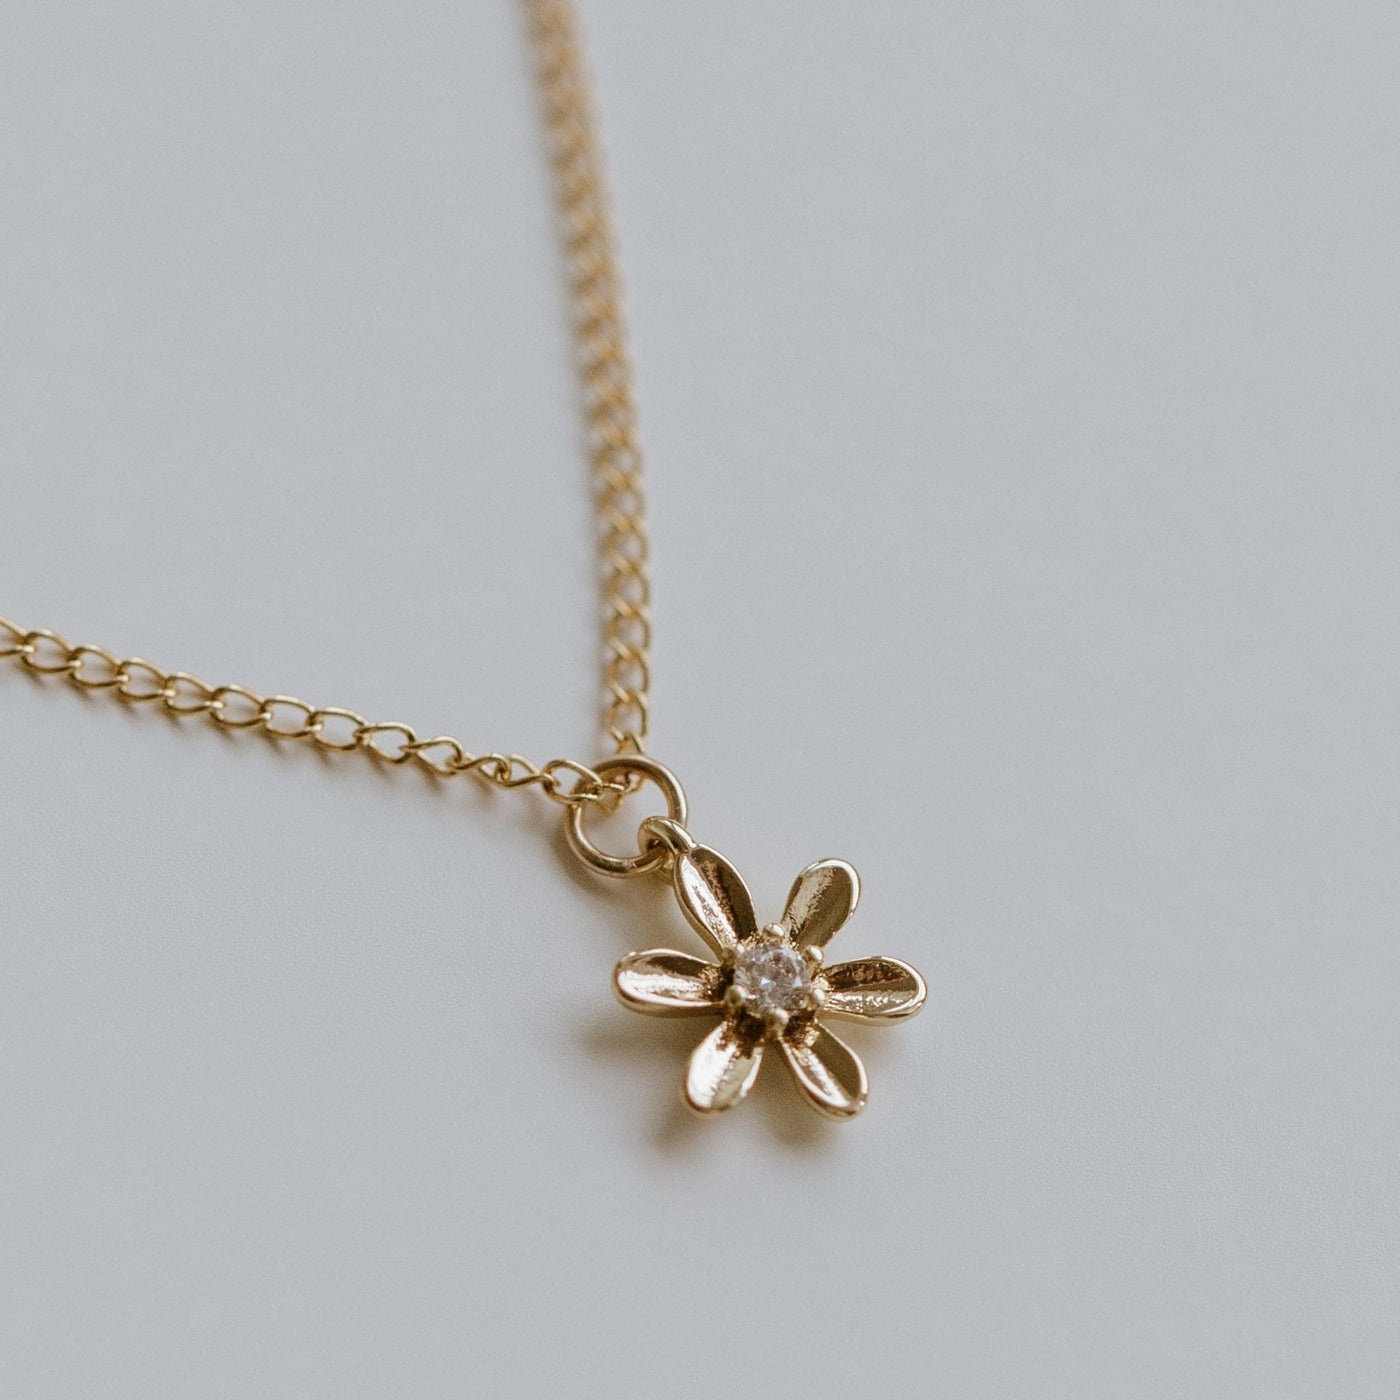 Granada Necklace - Jillian Leigh Jewellery - necklaces